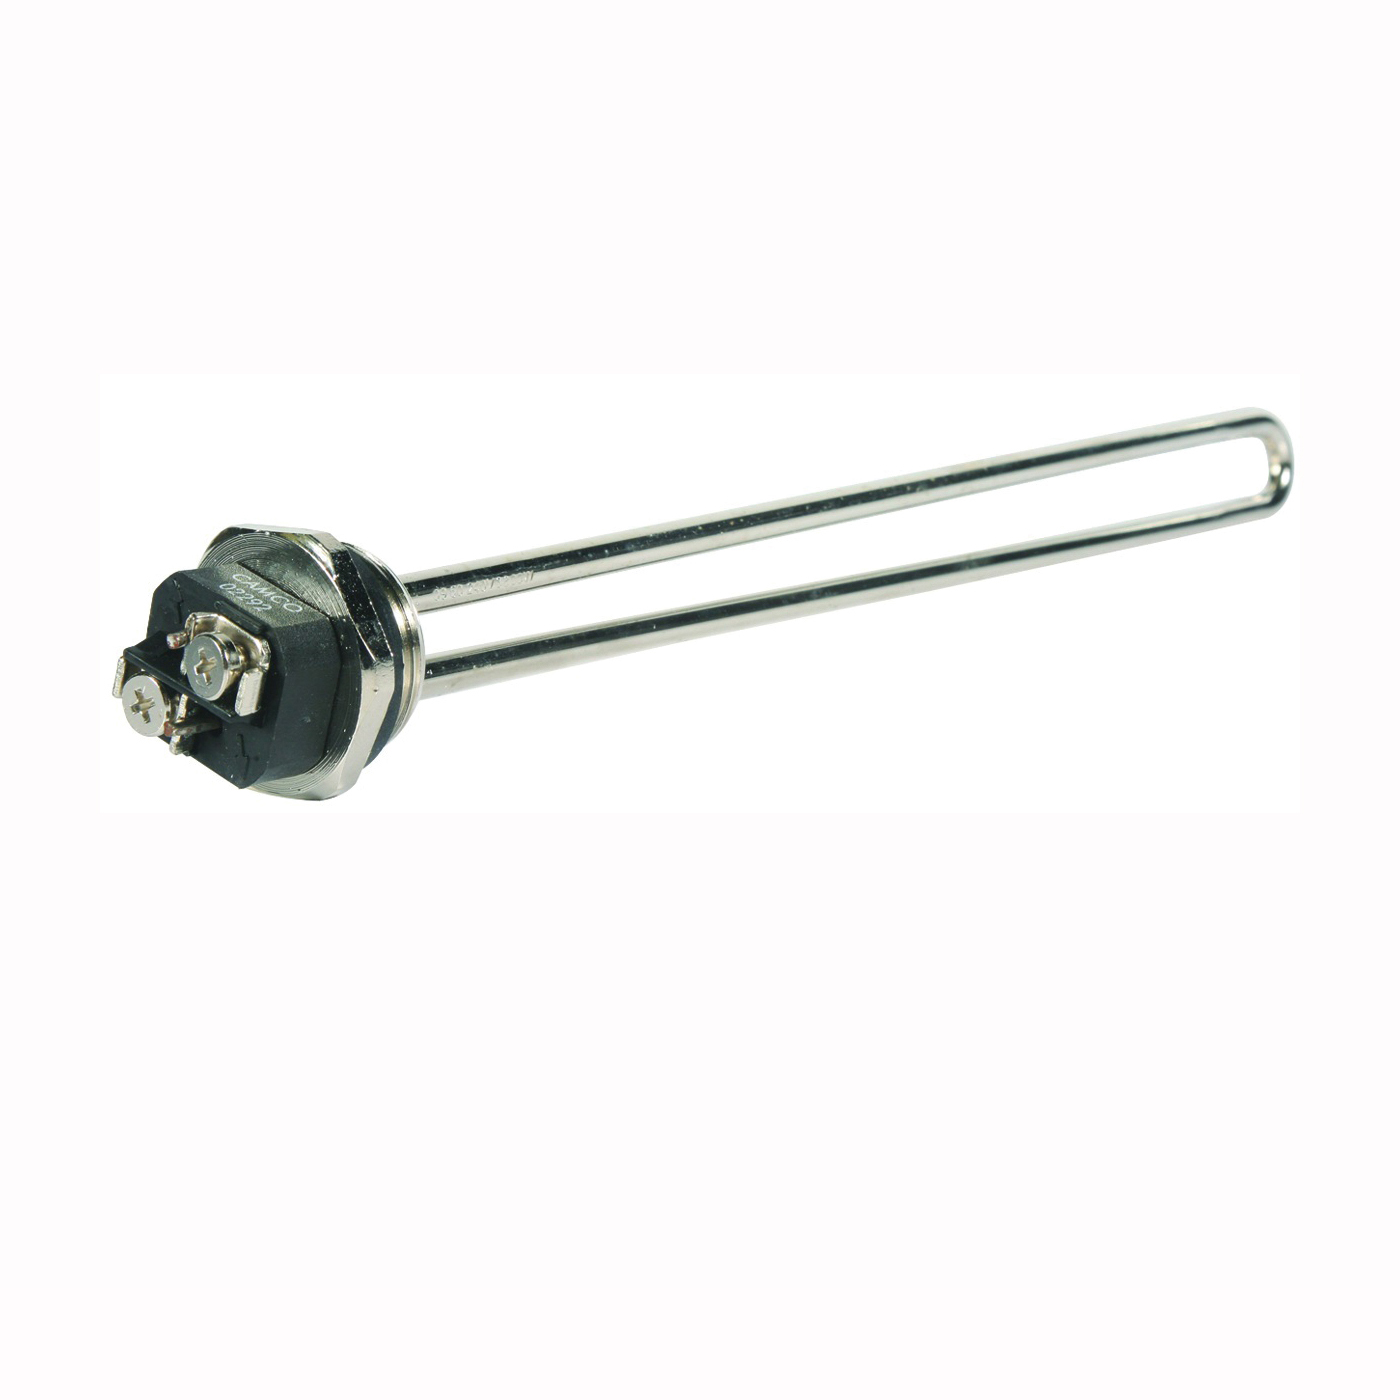 02293 Water Heater Element Screw, 240 V, 3800 W, Copper